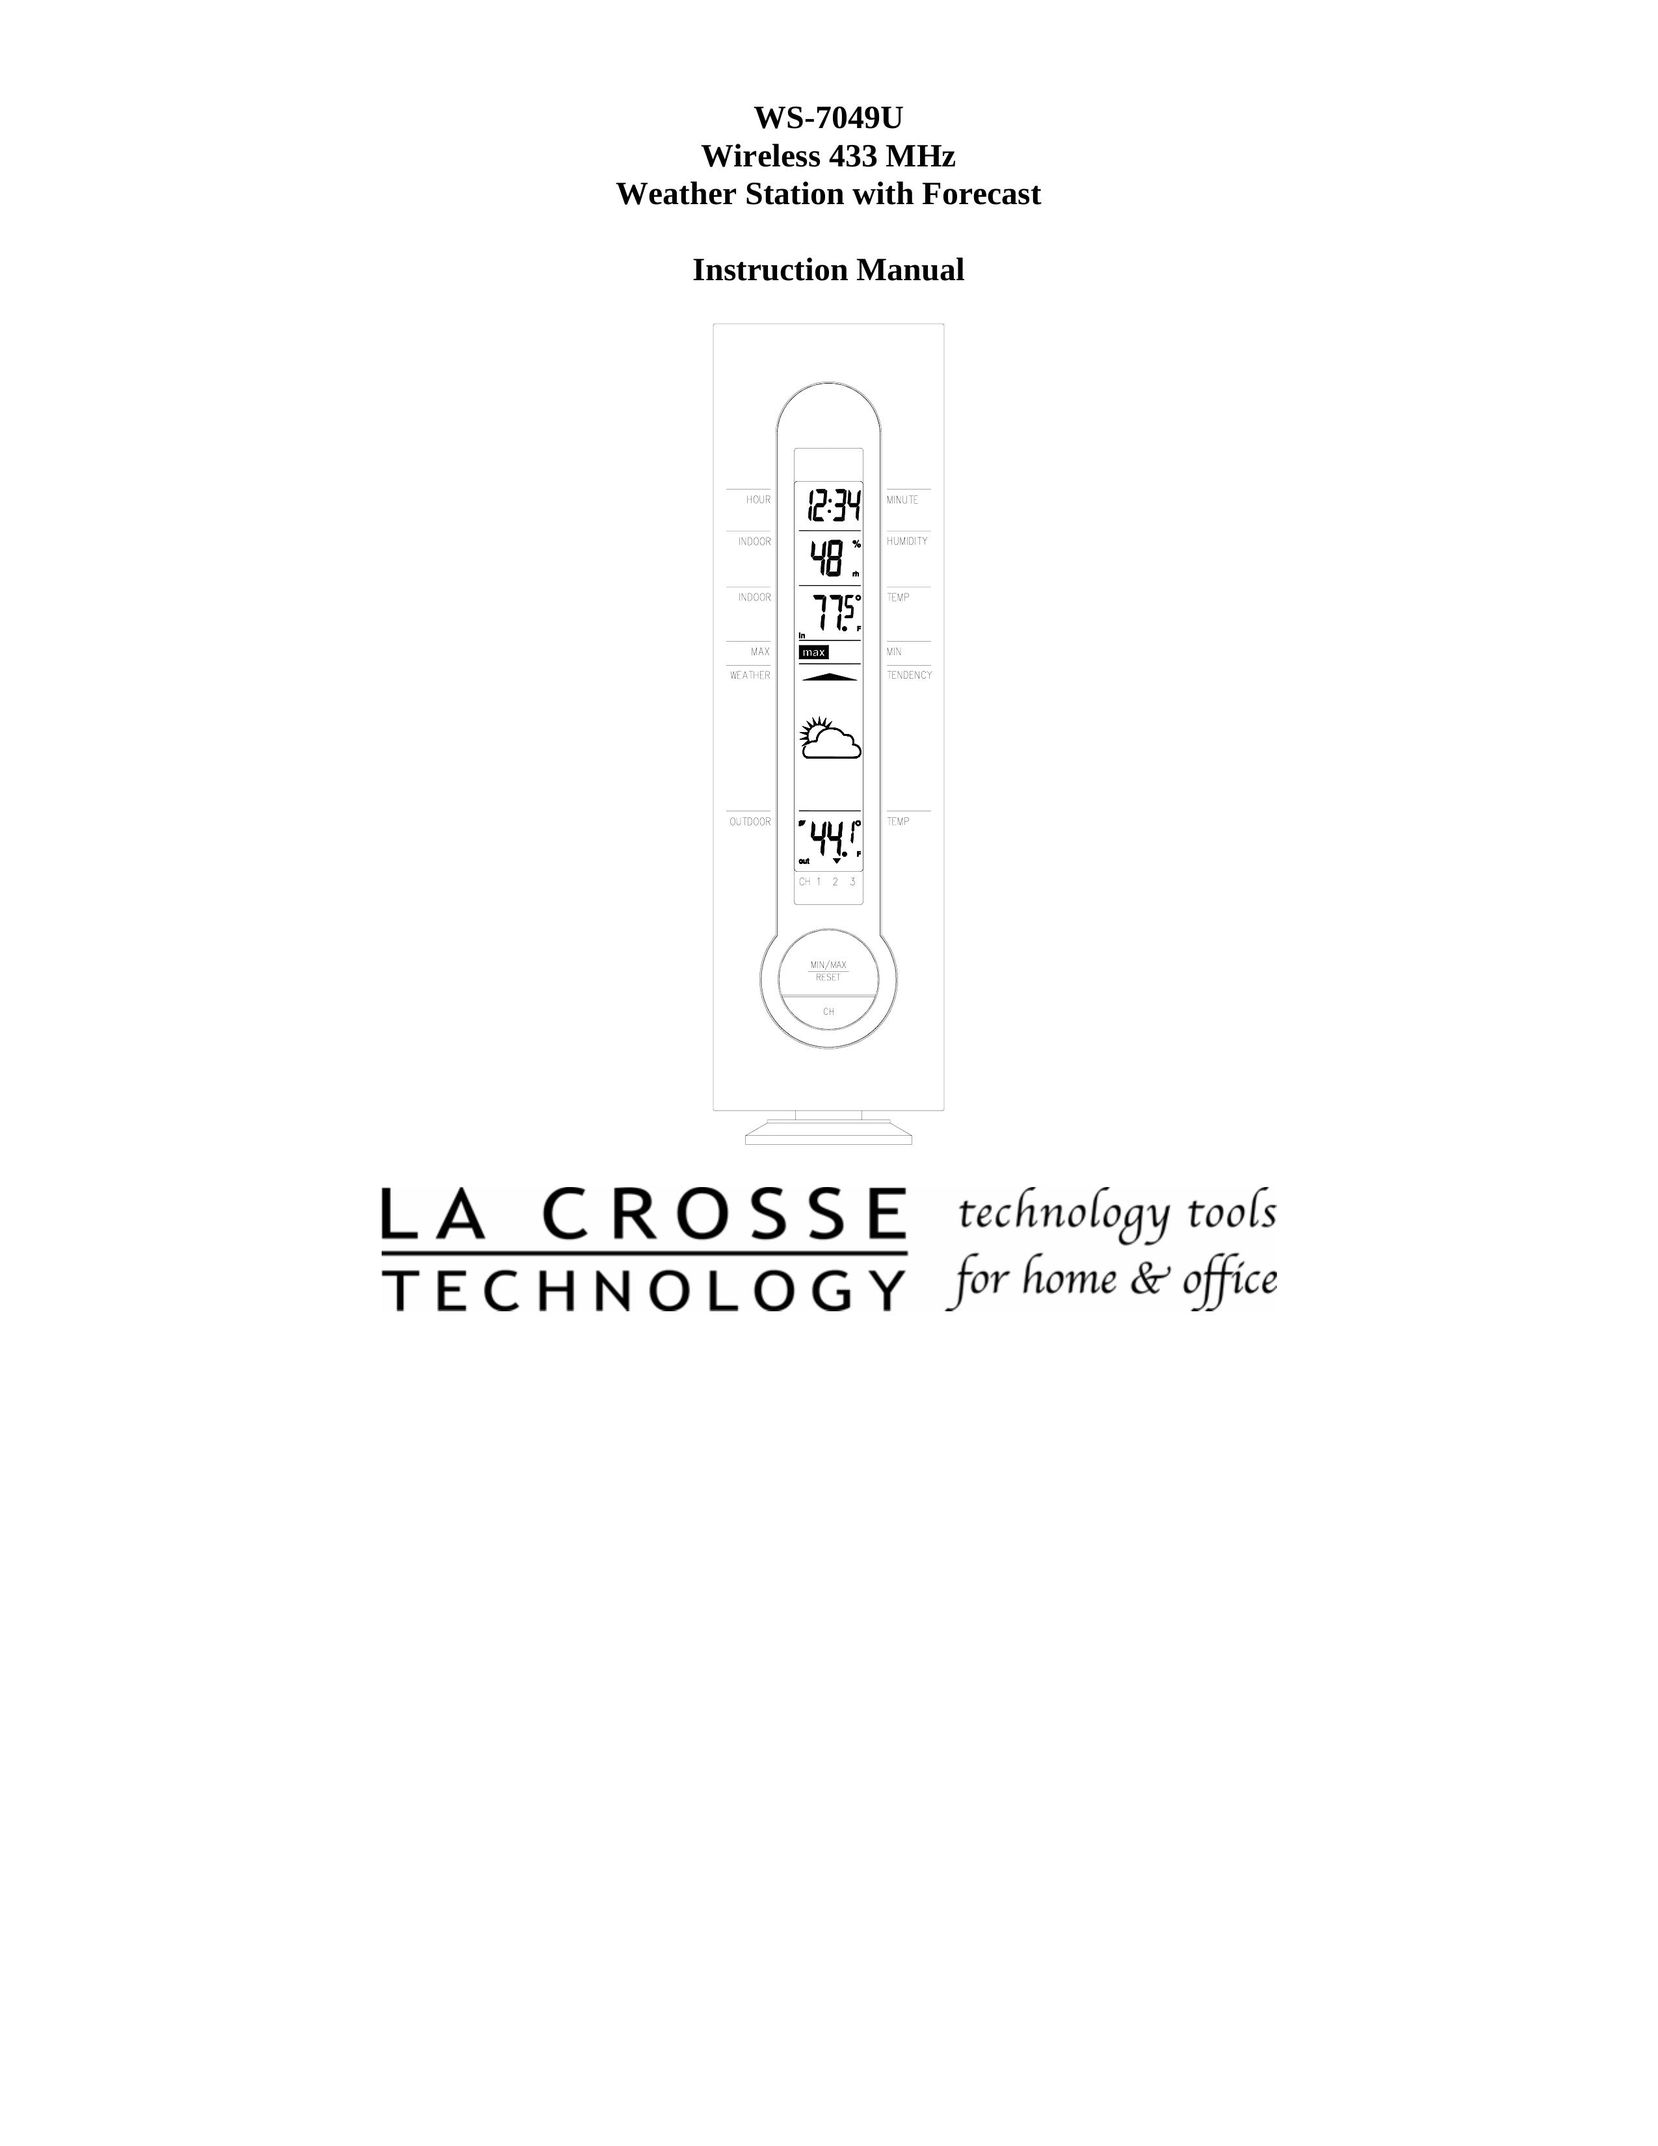 La Crosse Technology WS-7049U Portable Radio User Manual